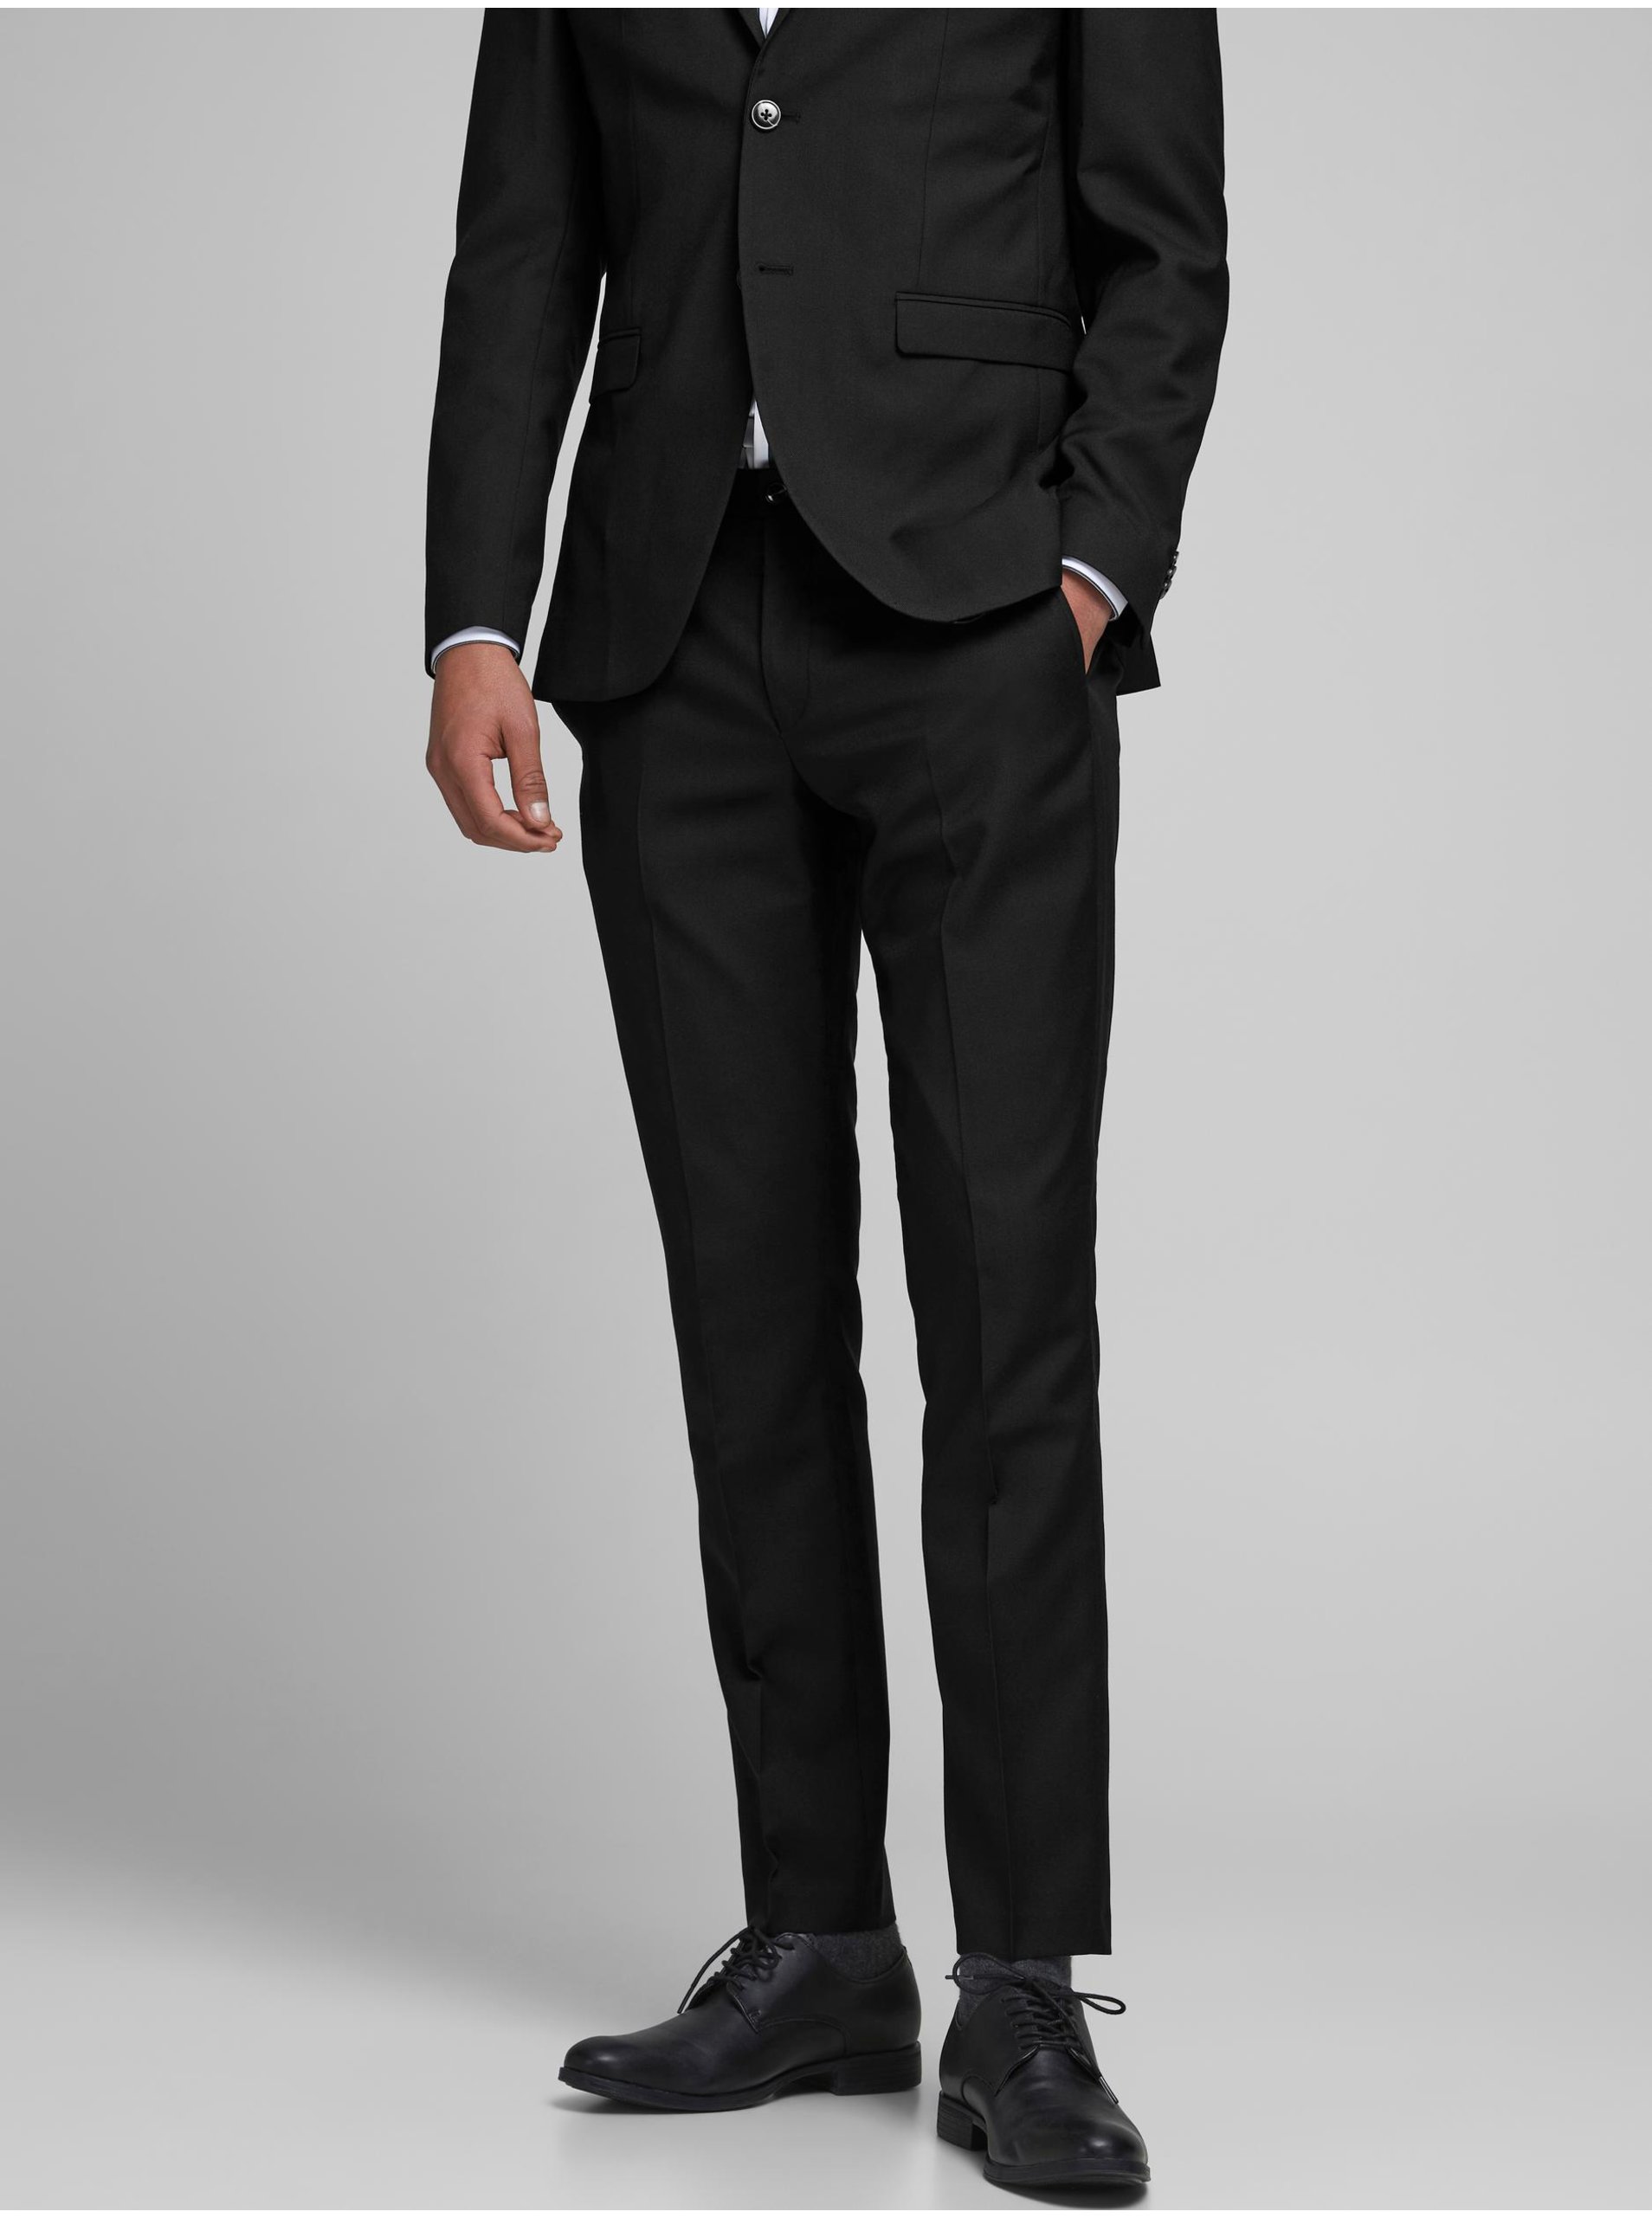 Black suit slim fit pants with wool Jack & Jones Solari - Men